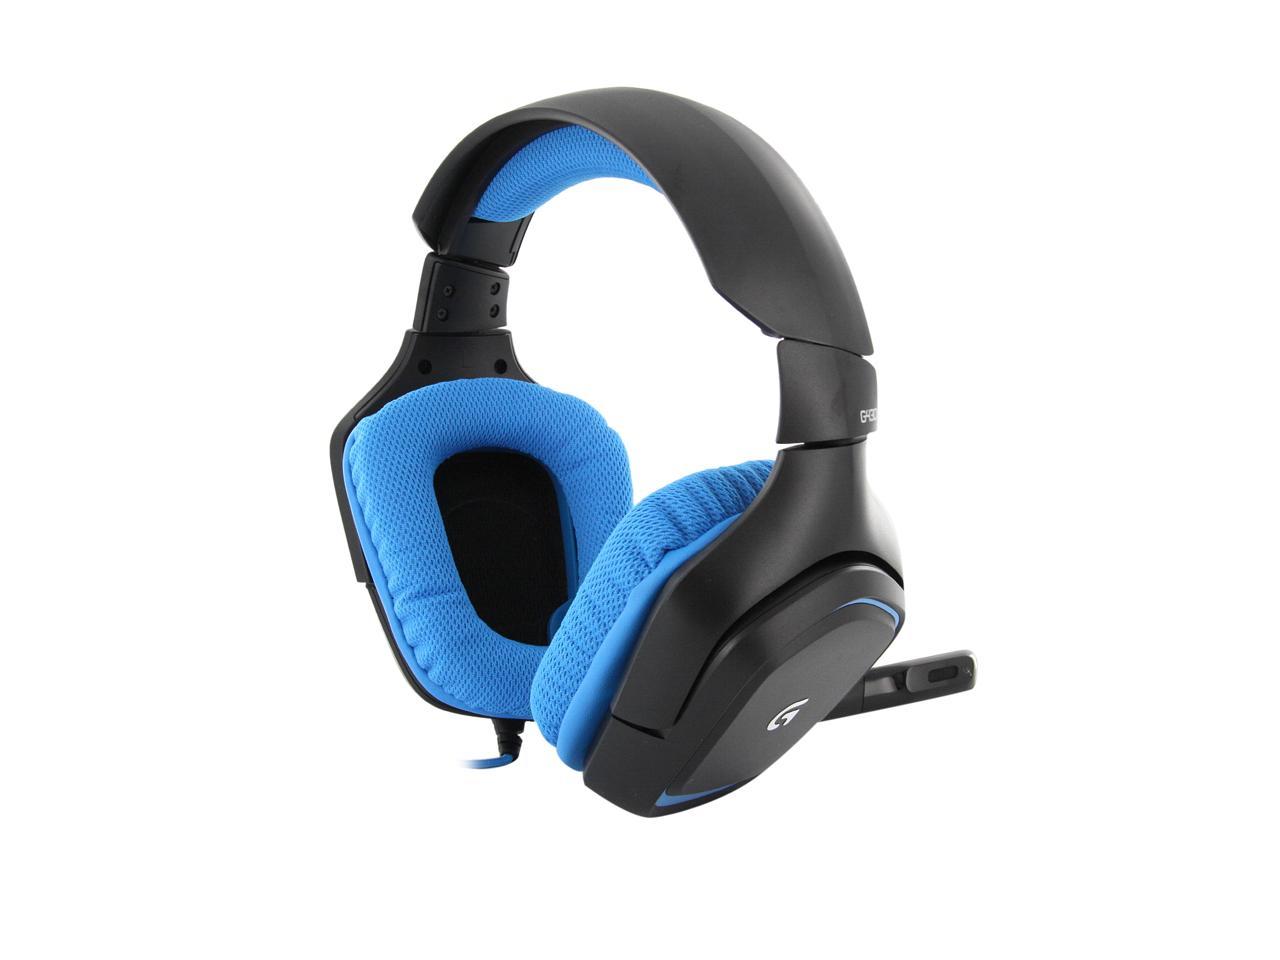 Logitech G430 Circumaural Surround Sound Gaming Headset - Newegg.com